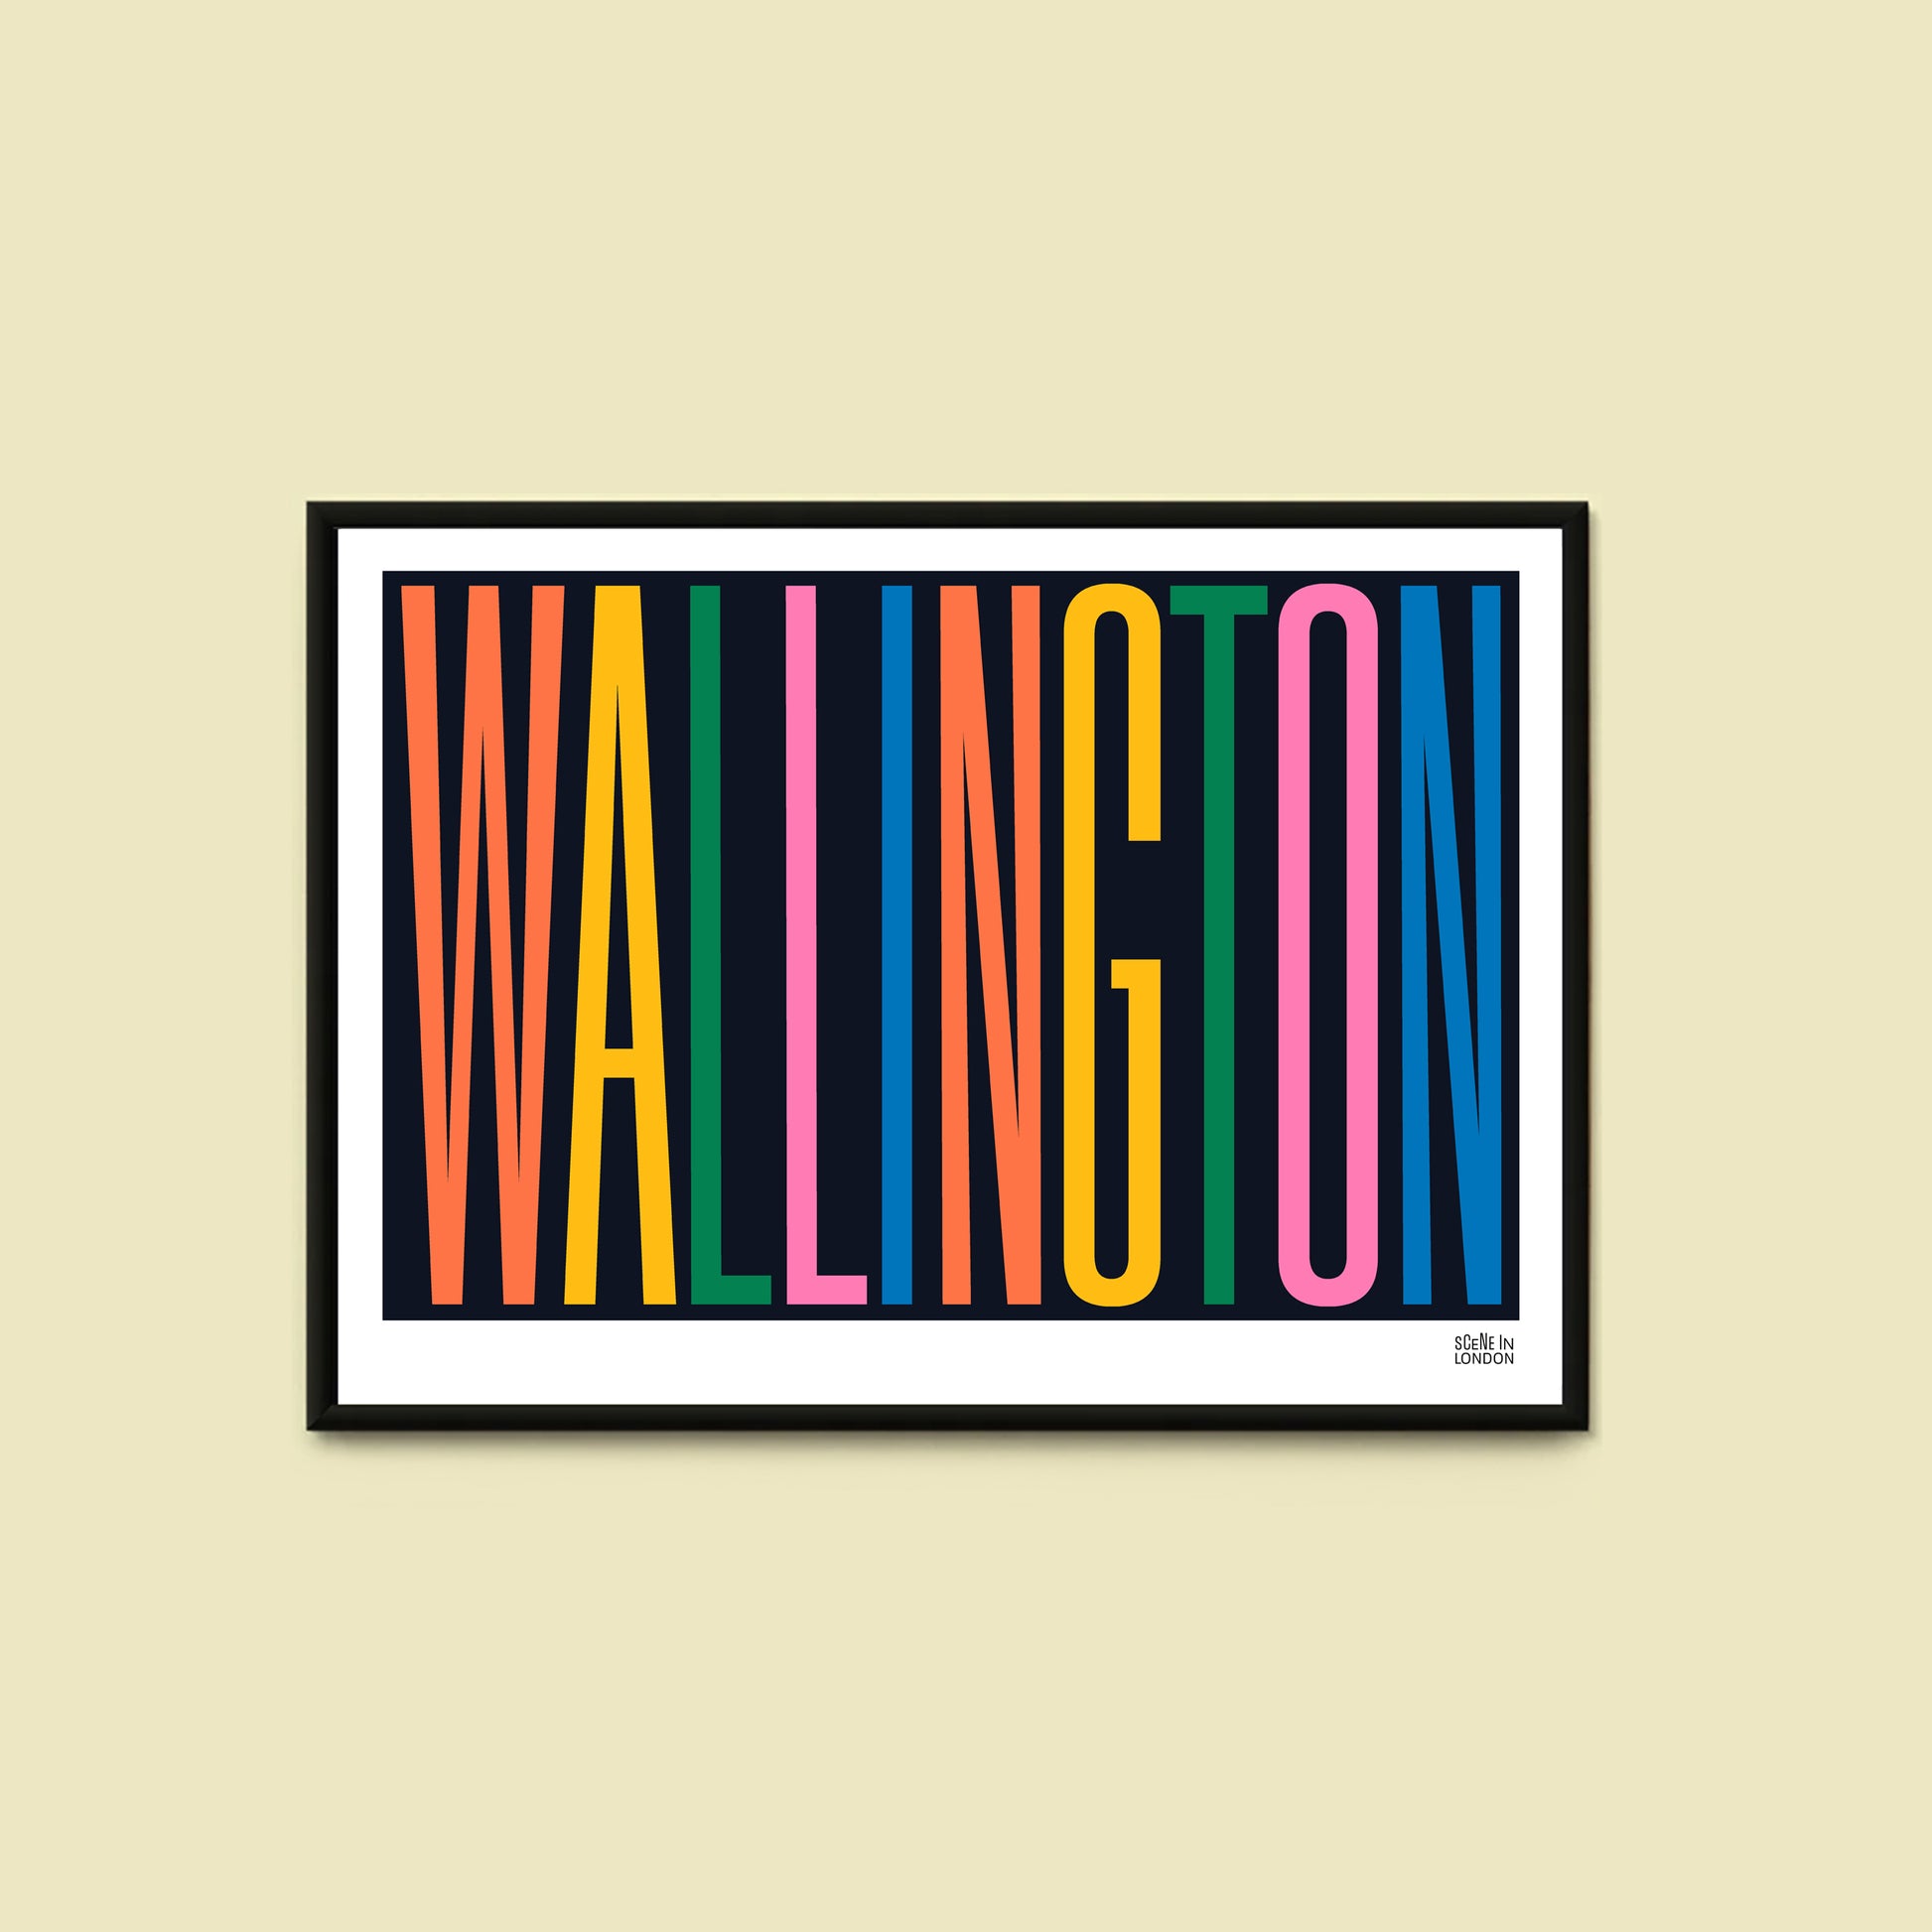 Wallington Typography Art Poster